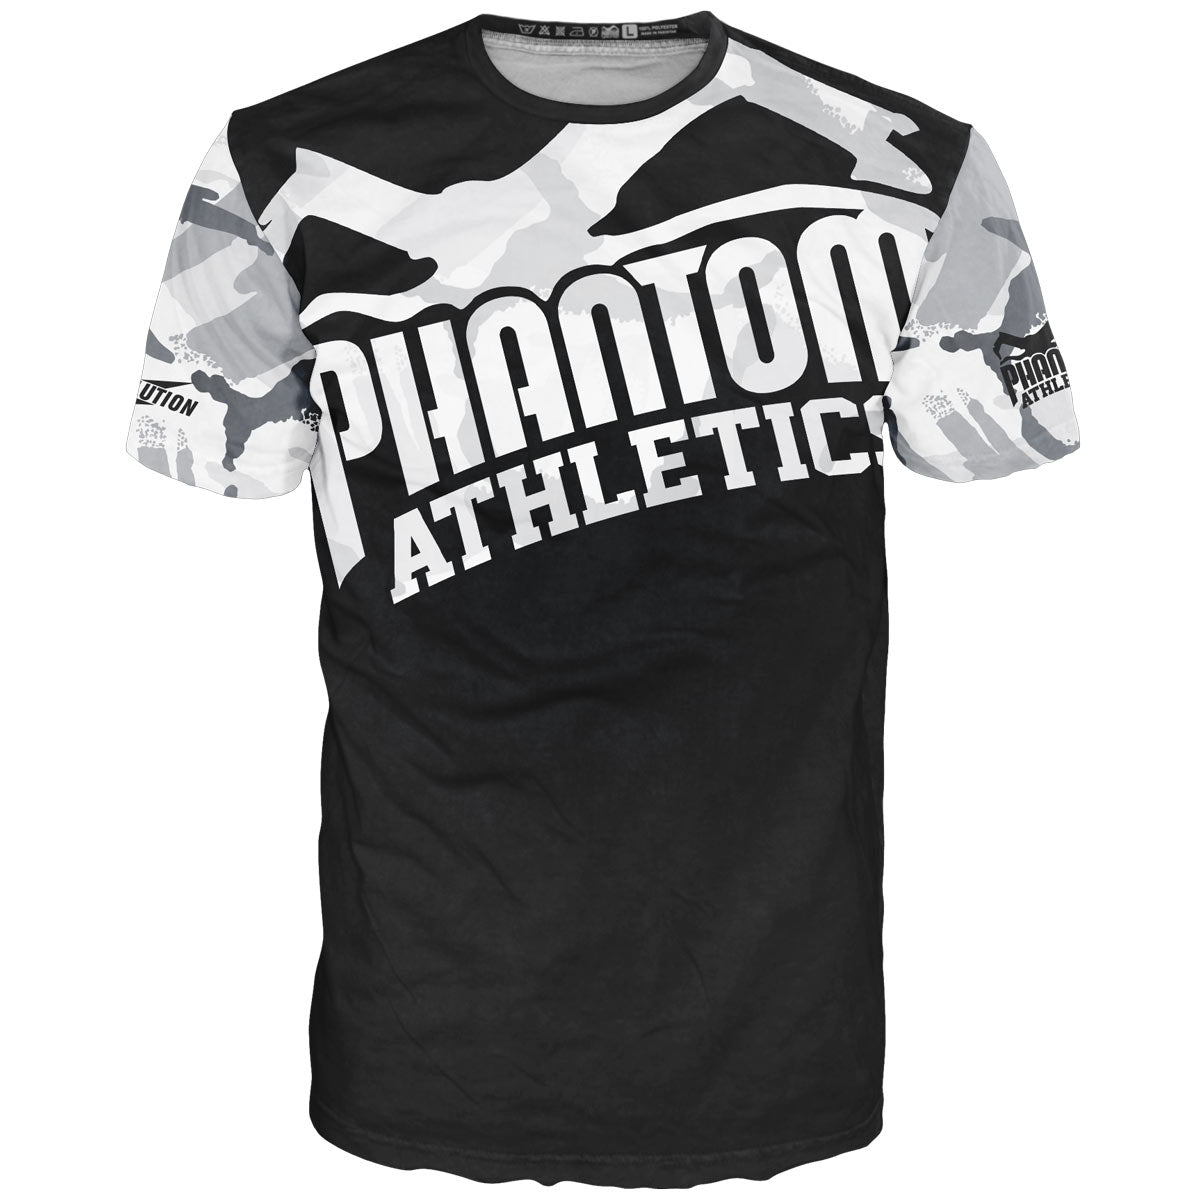 Phantom Kampfsport EVO training shirt in winter/urban camo look. Breathable performance training shirt for MMA, Muay Thai, BJJ and kickboxing.